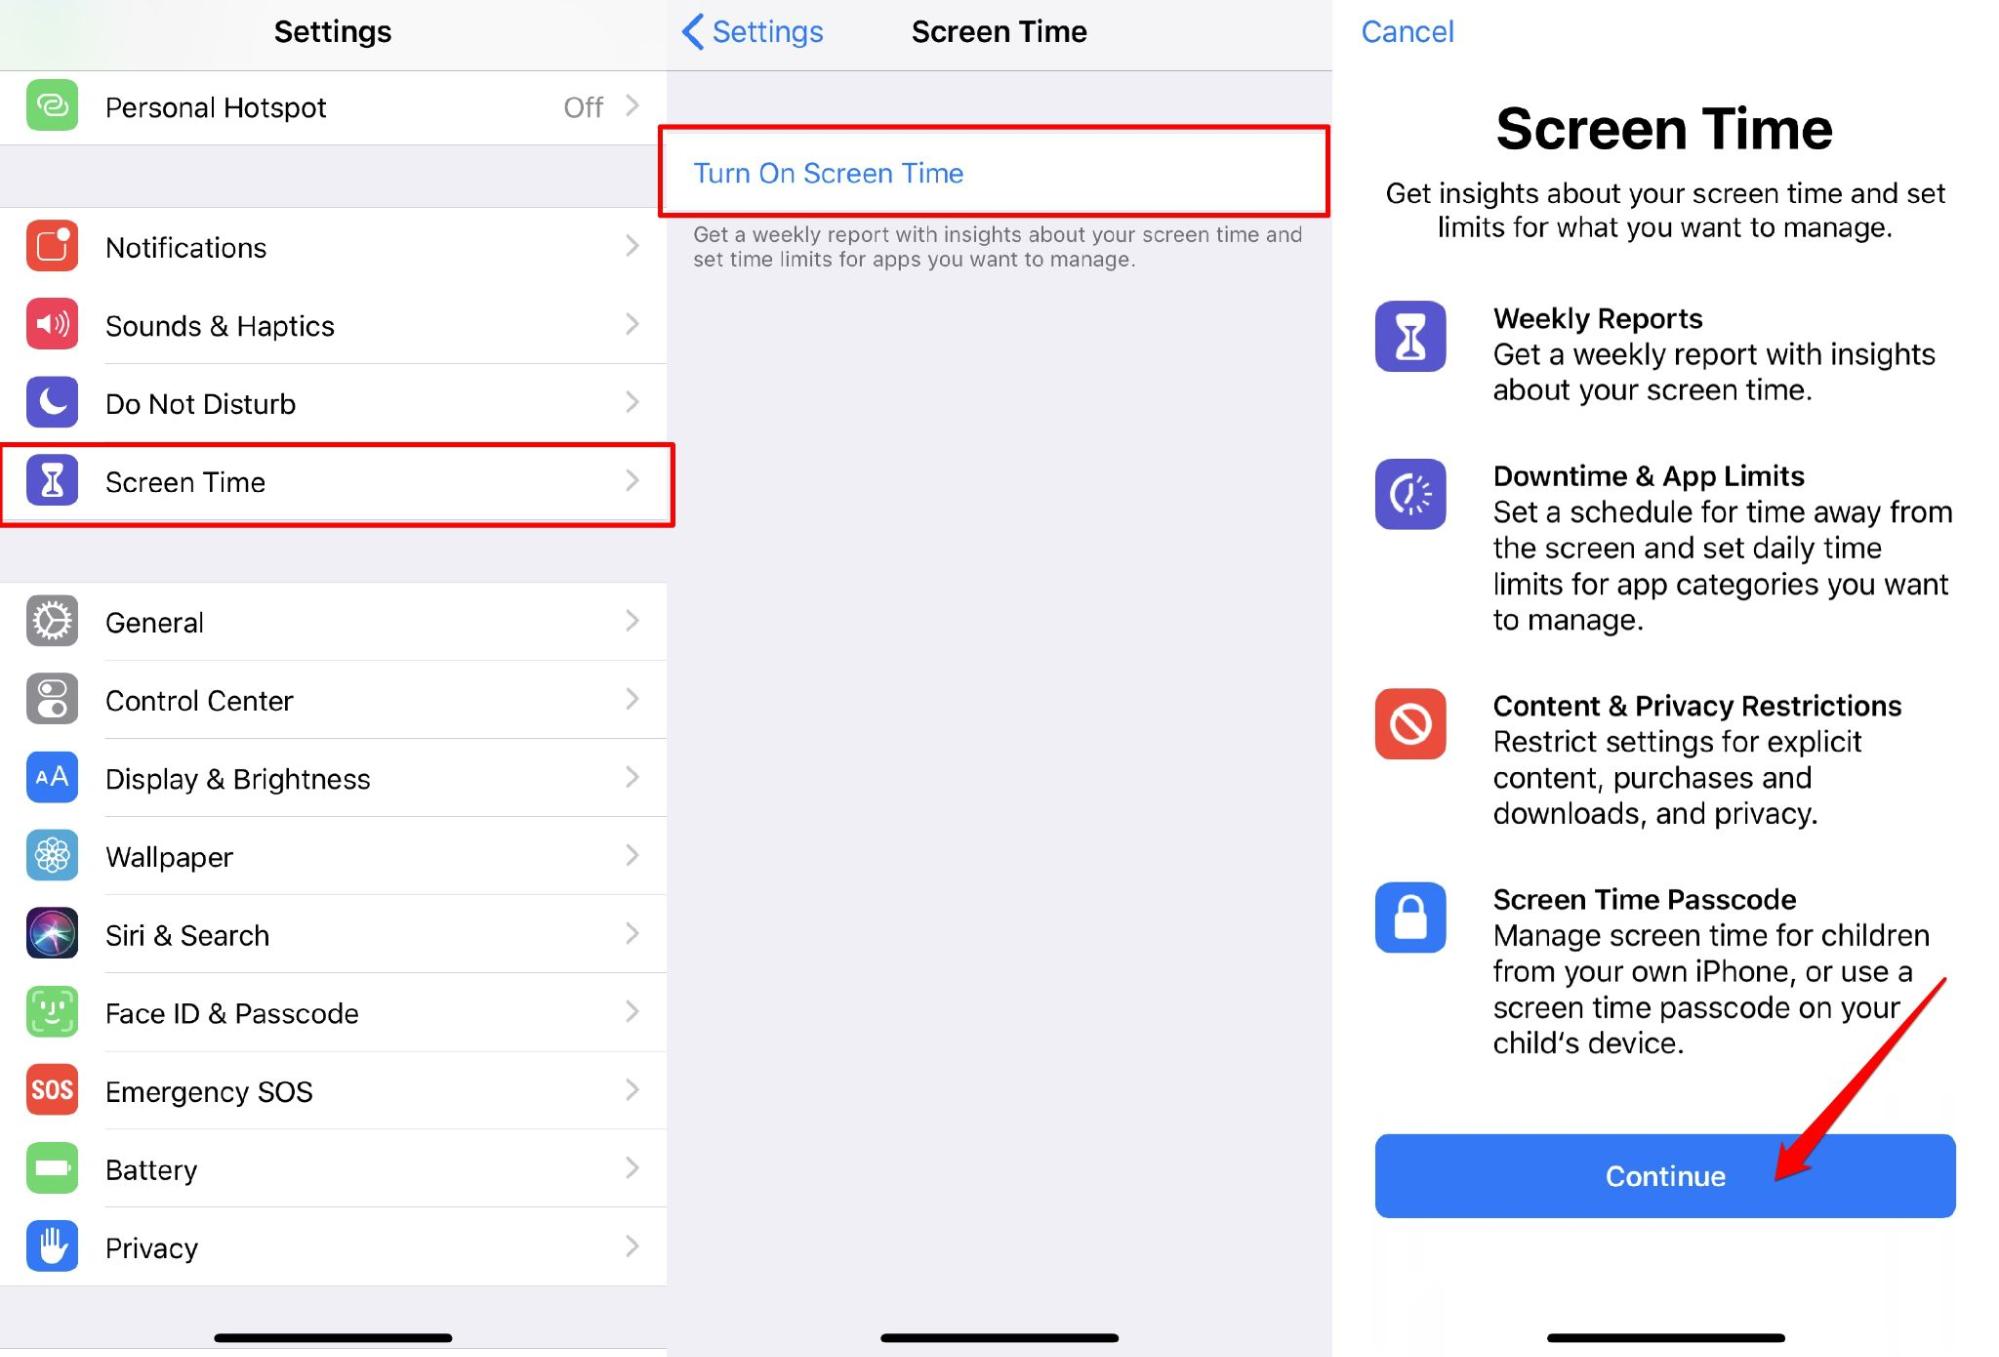 How to Disable Safari App on iPhone/iPad?